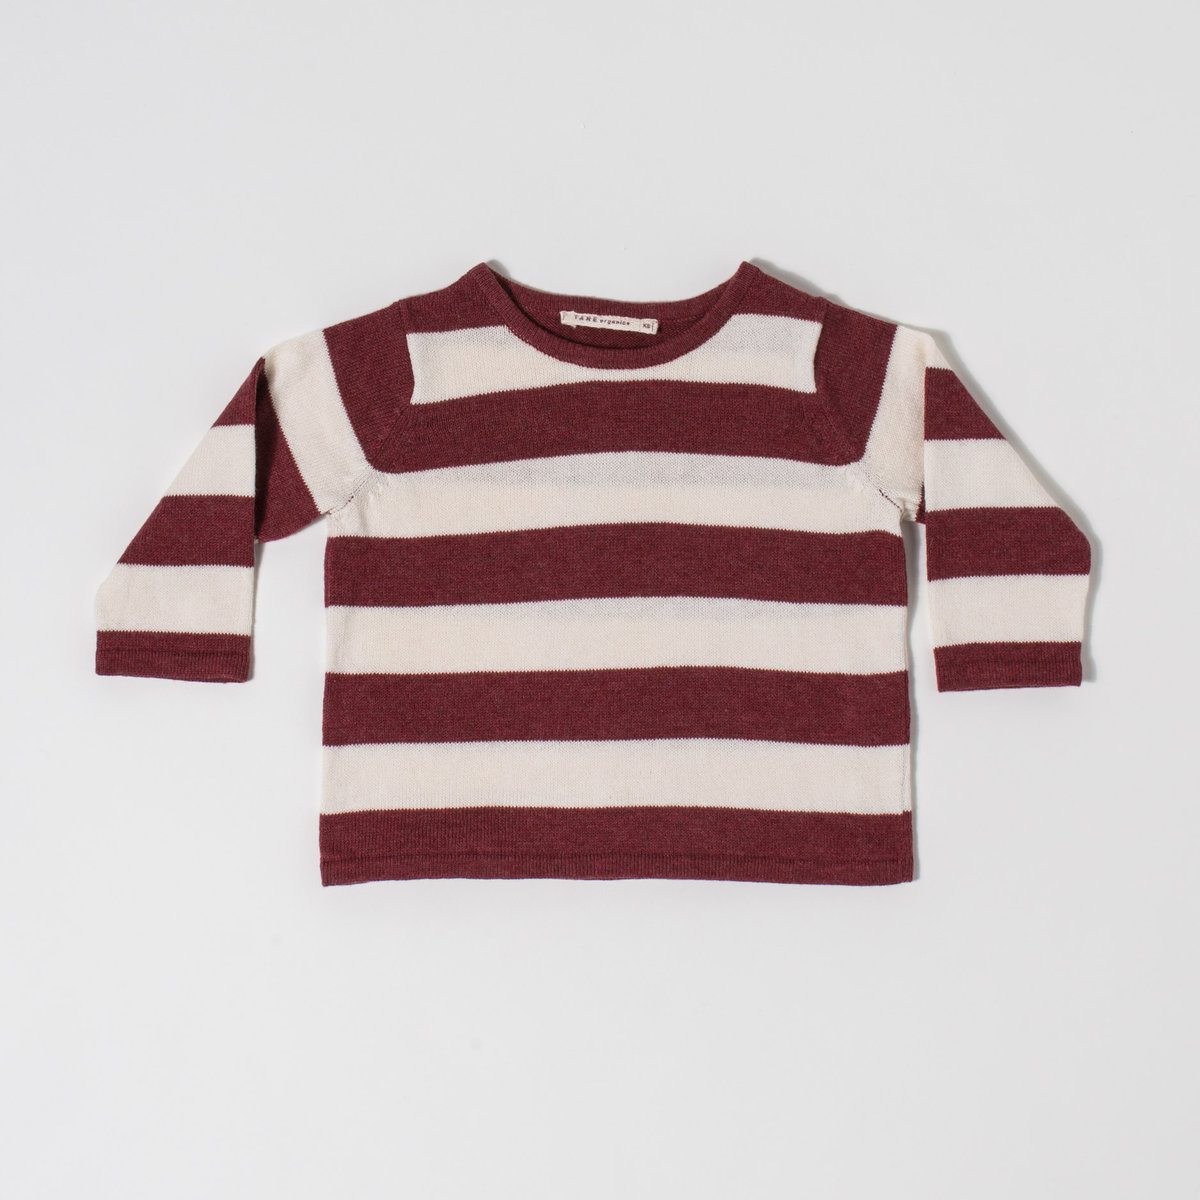 TANE Organics Striped Sweater